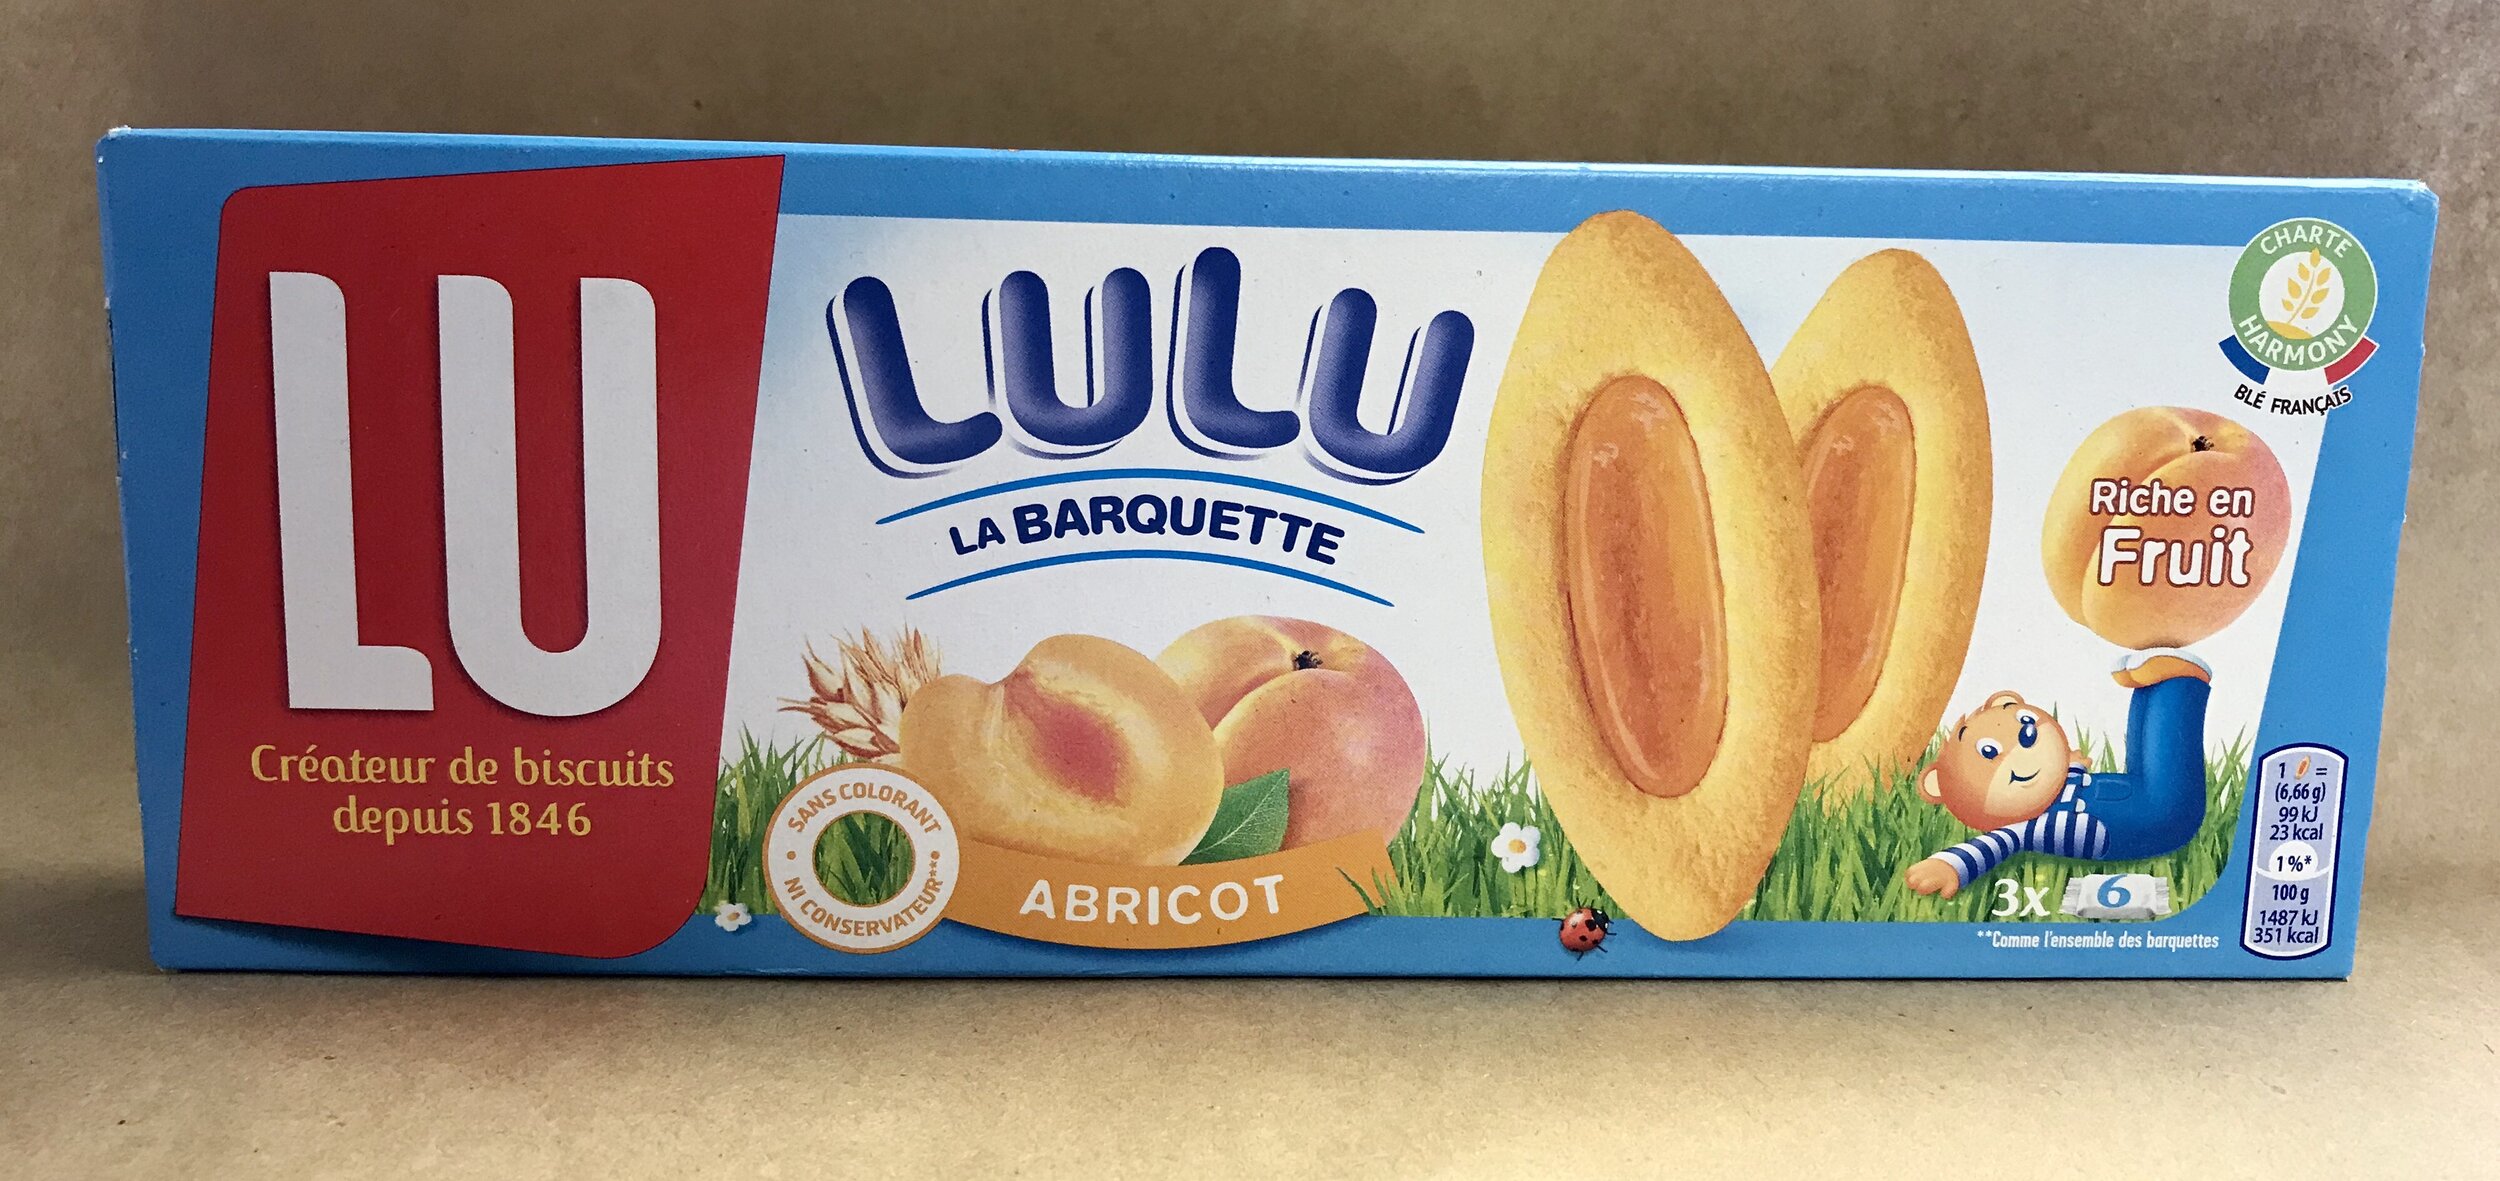 Lu Lulu Barquette abricot (120g) acheter à prix réduit